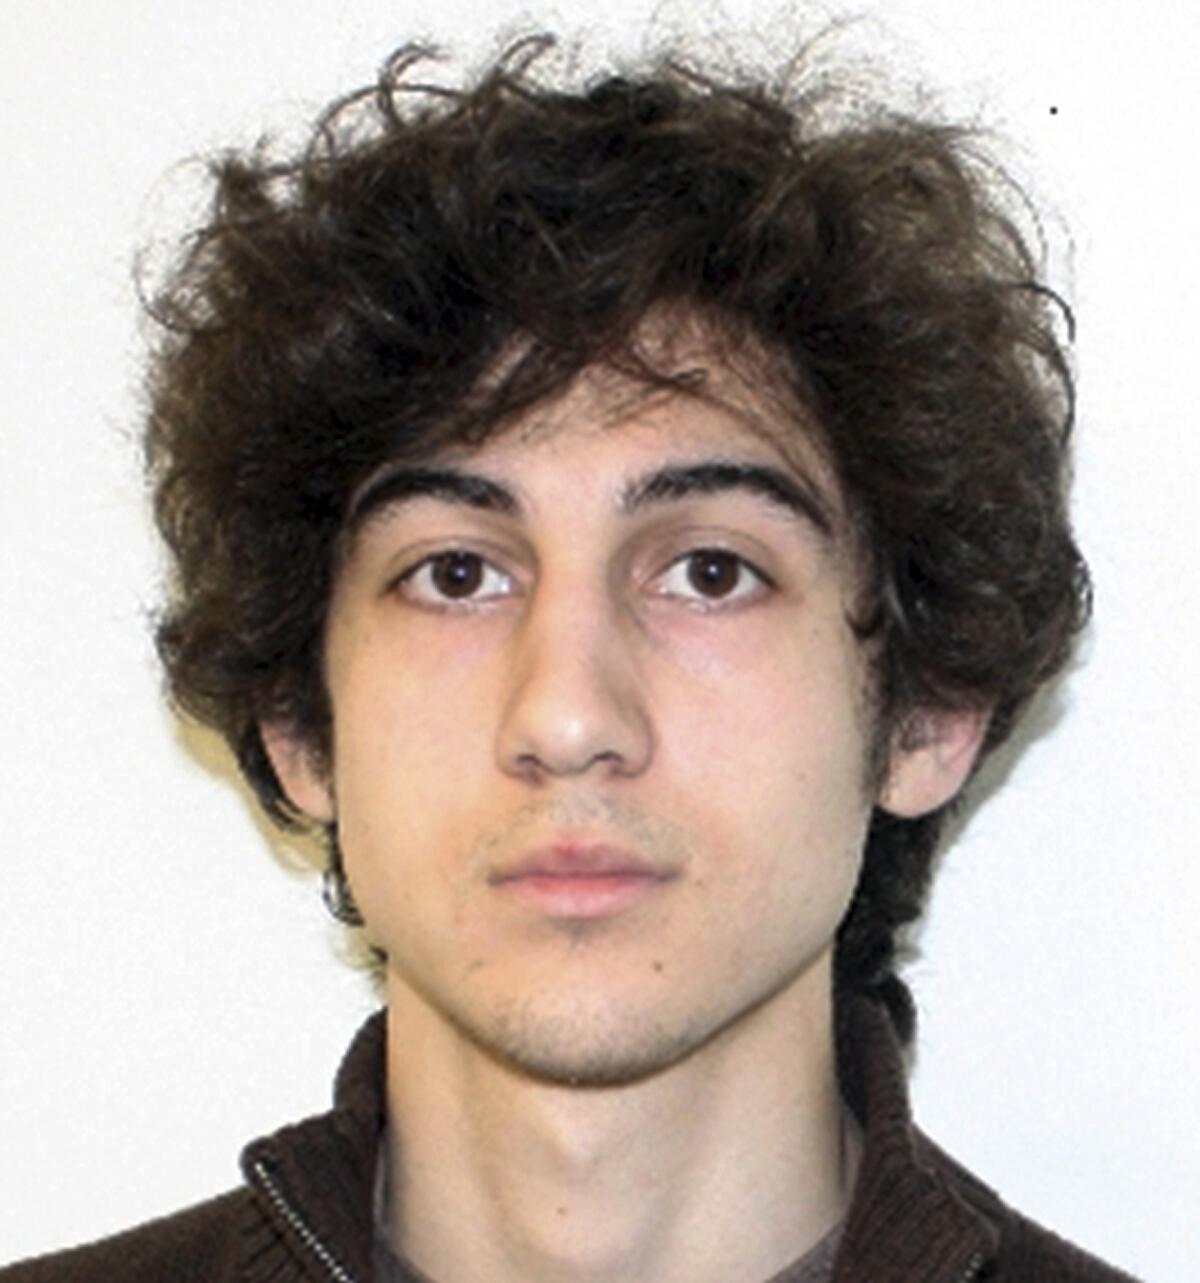 Dzhokhar Tsarnaev in a photo released by the FBI on April 19, 2013.